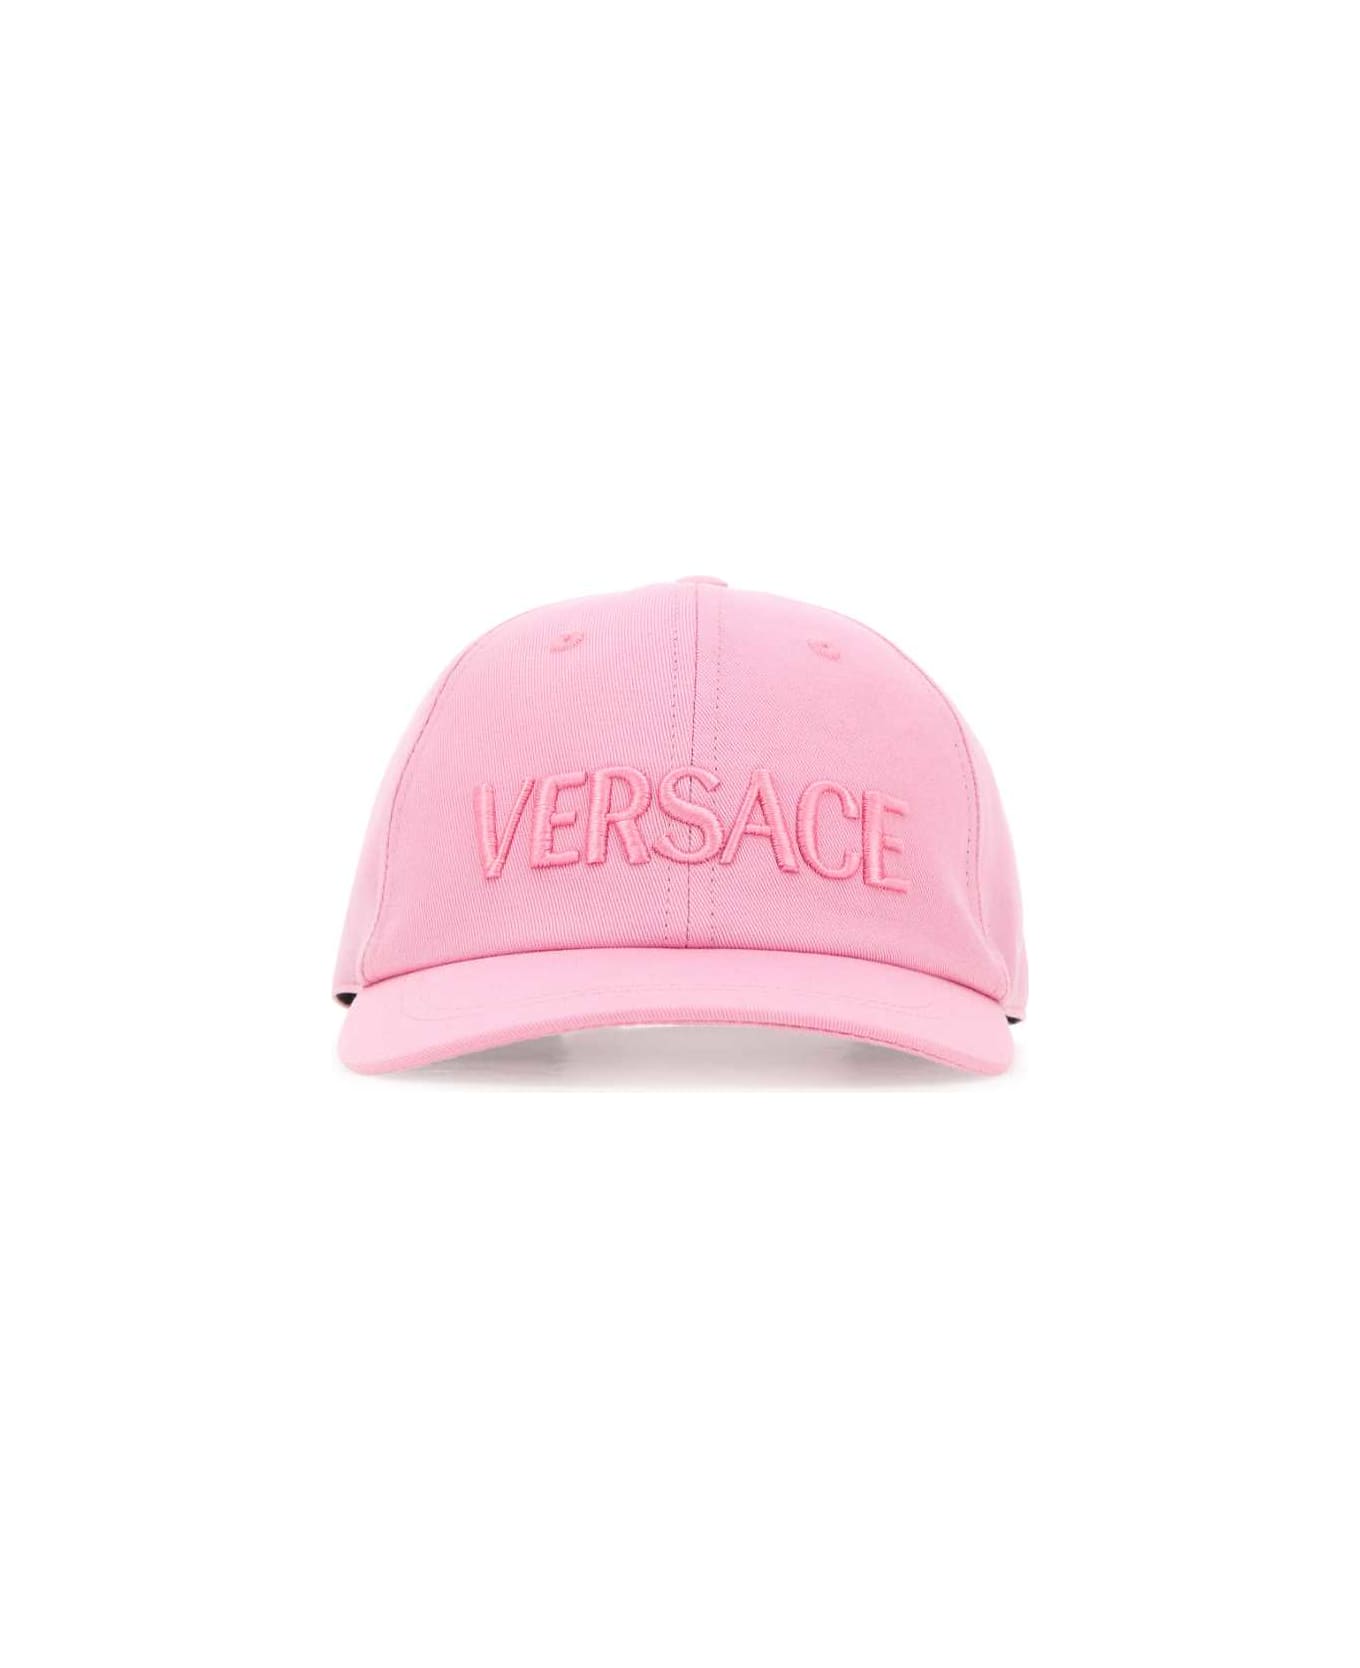 Versace Pink Cotton Baseball Cap - PALEPINKPALEPINK